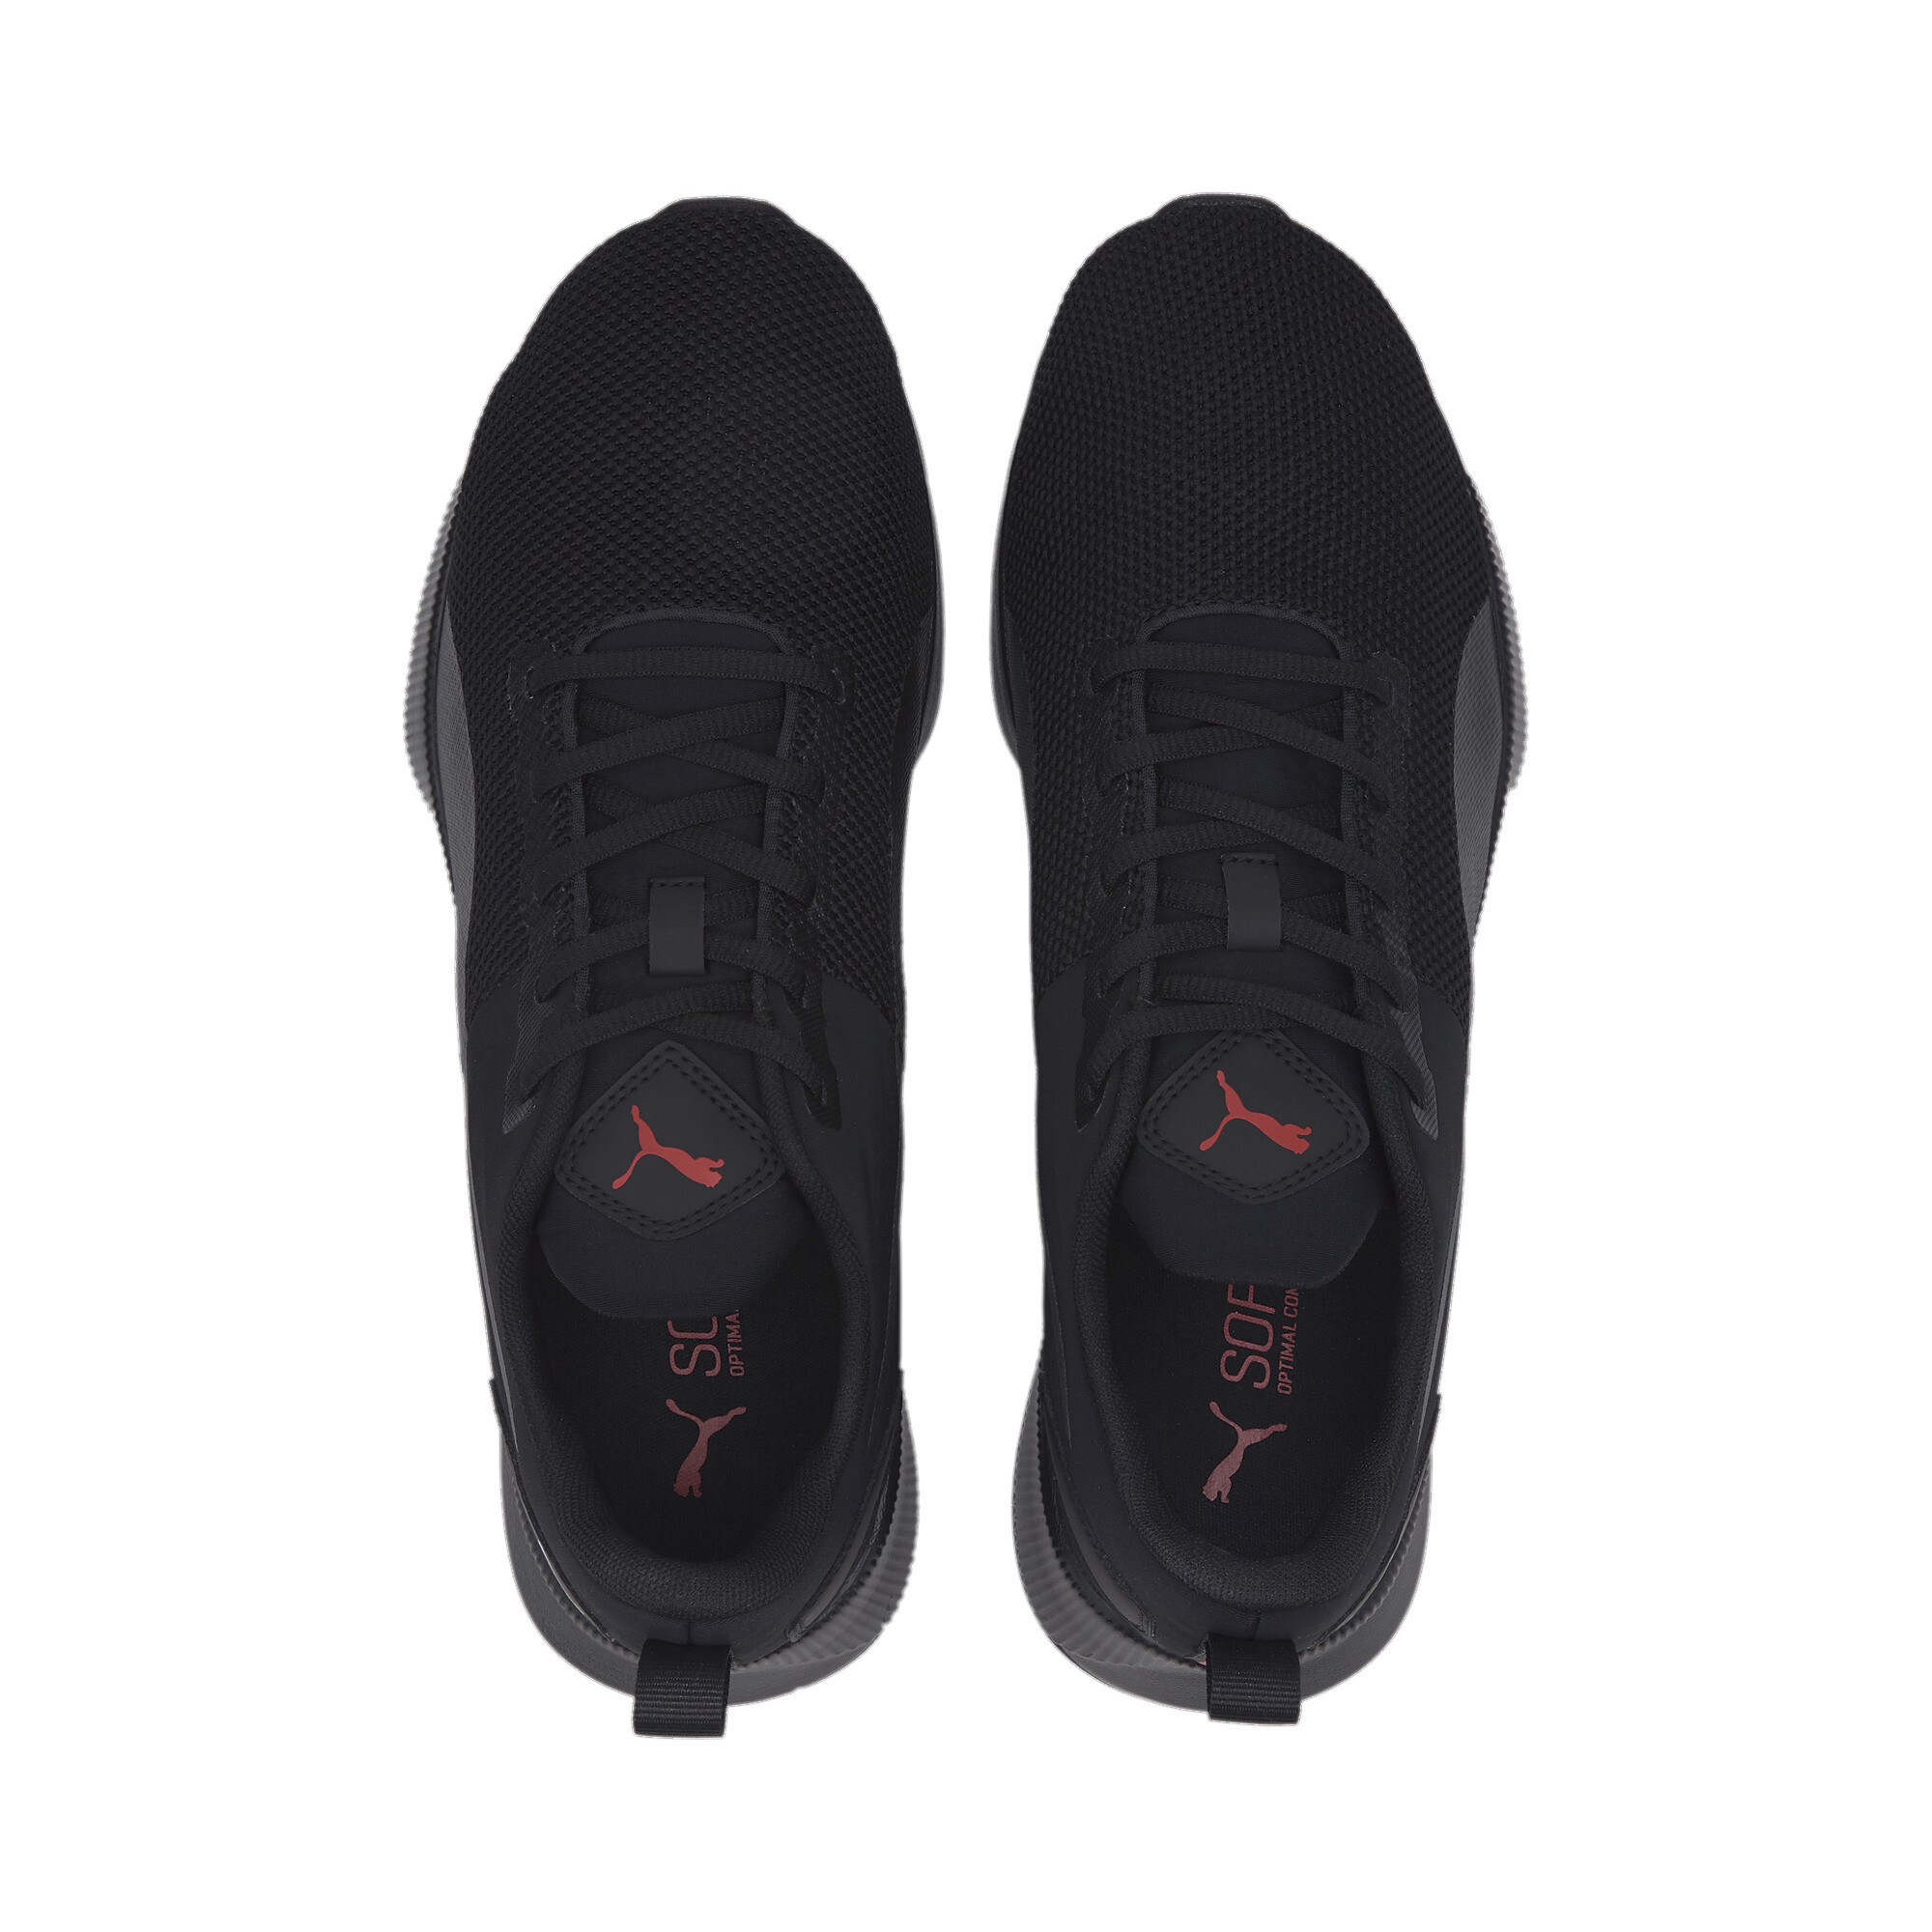 Men's PUMA Flyer Running Shoes In Black, Size EU 38.5